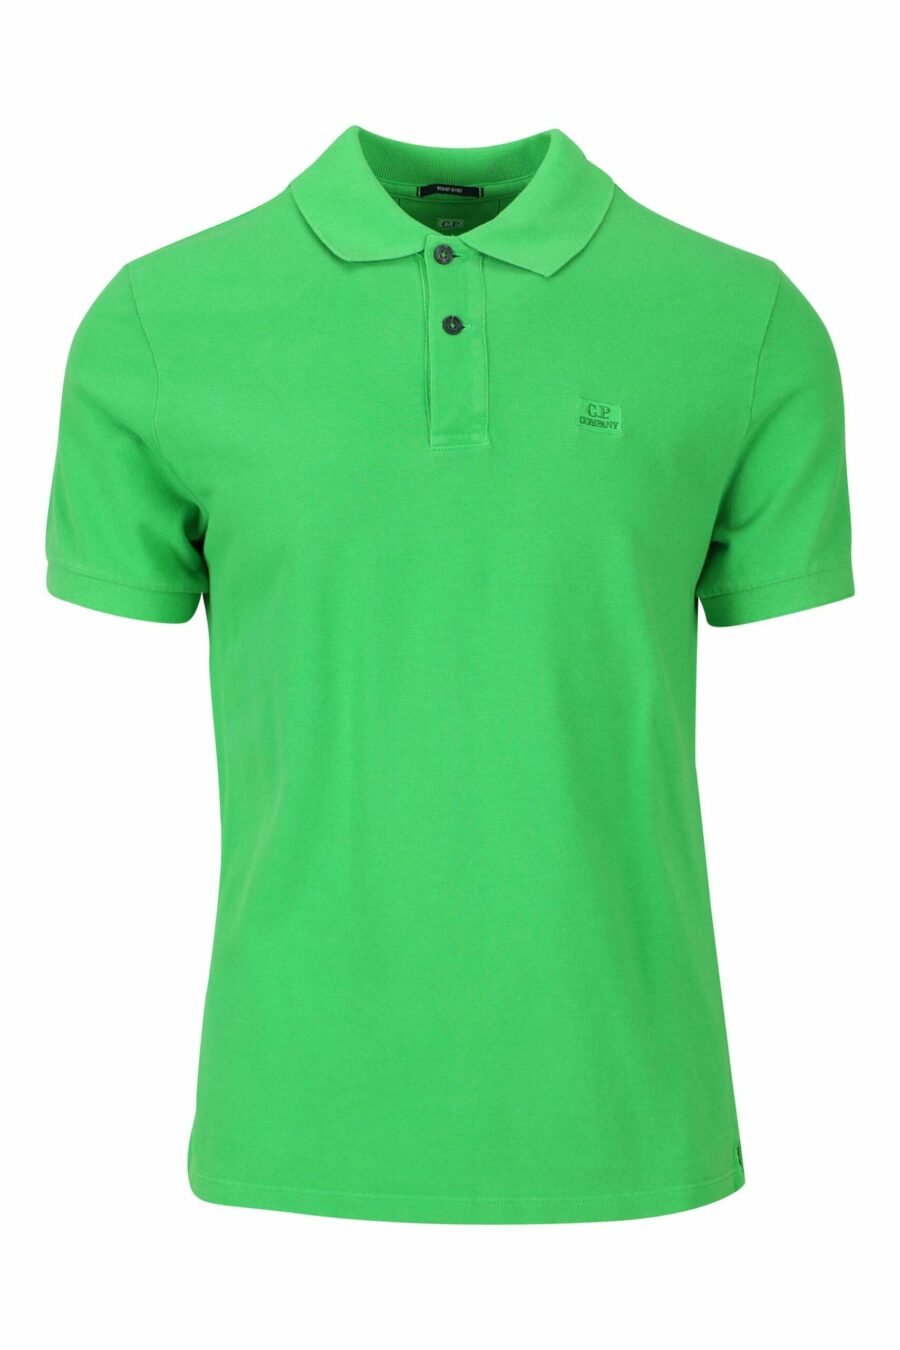 Polo vert avec mini patch logo - 7620943642308 1 scaled